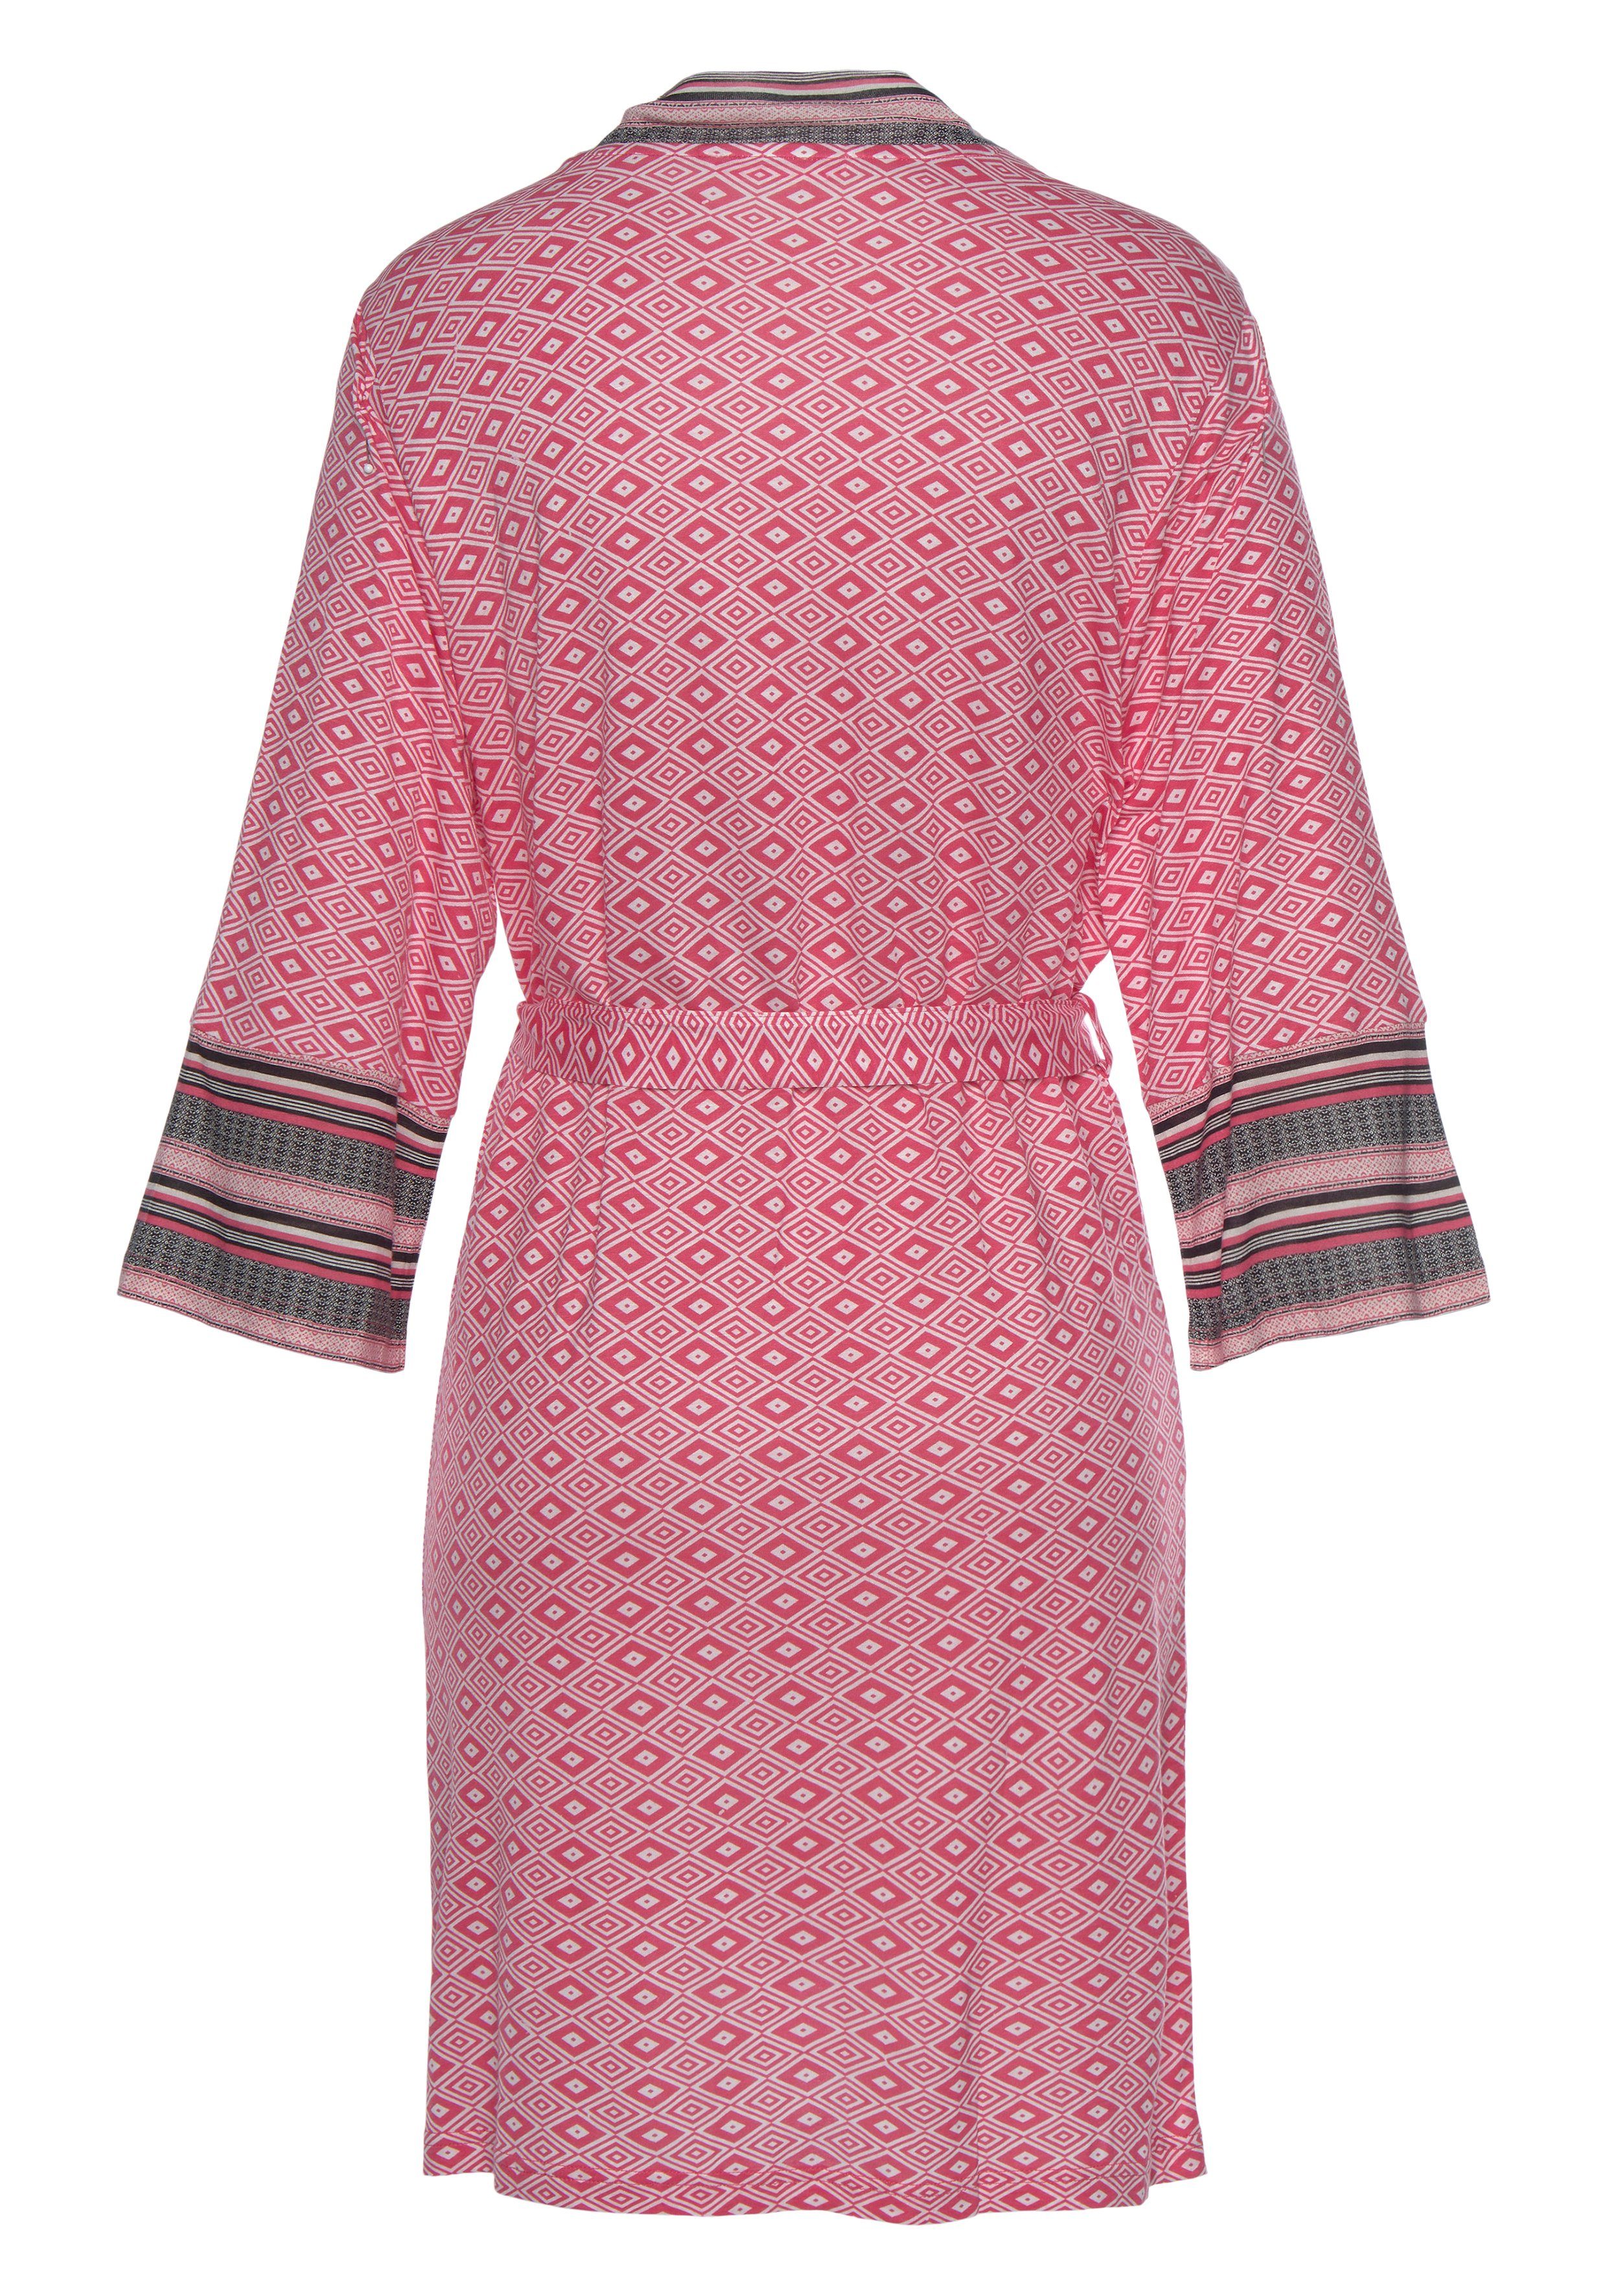 pink Ethno-Design gemustert Dreams in Kurzform, Vivance Kimono-Kragen, Kimono, Single-Jersey, Gürtel, schönem